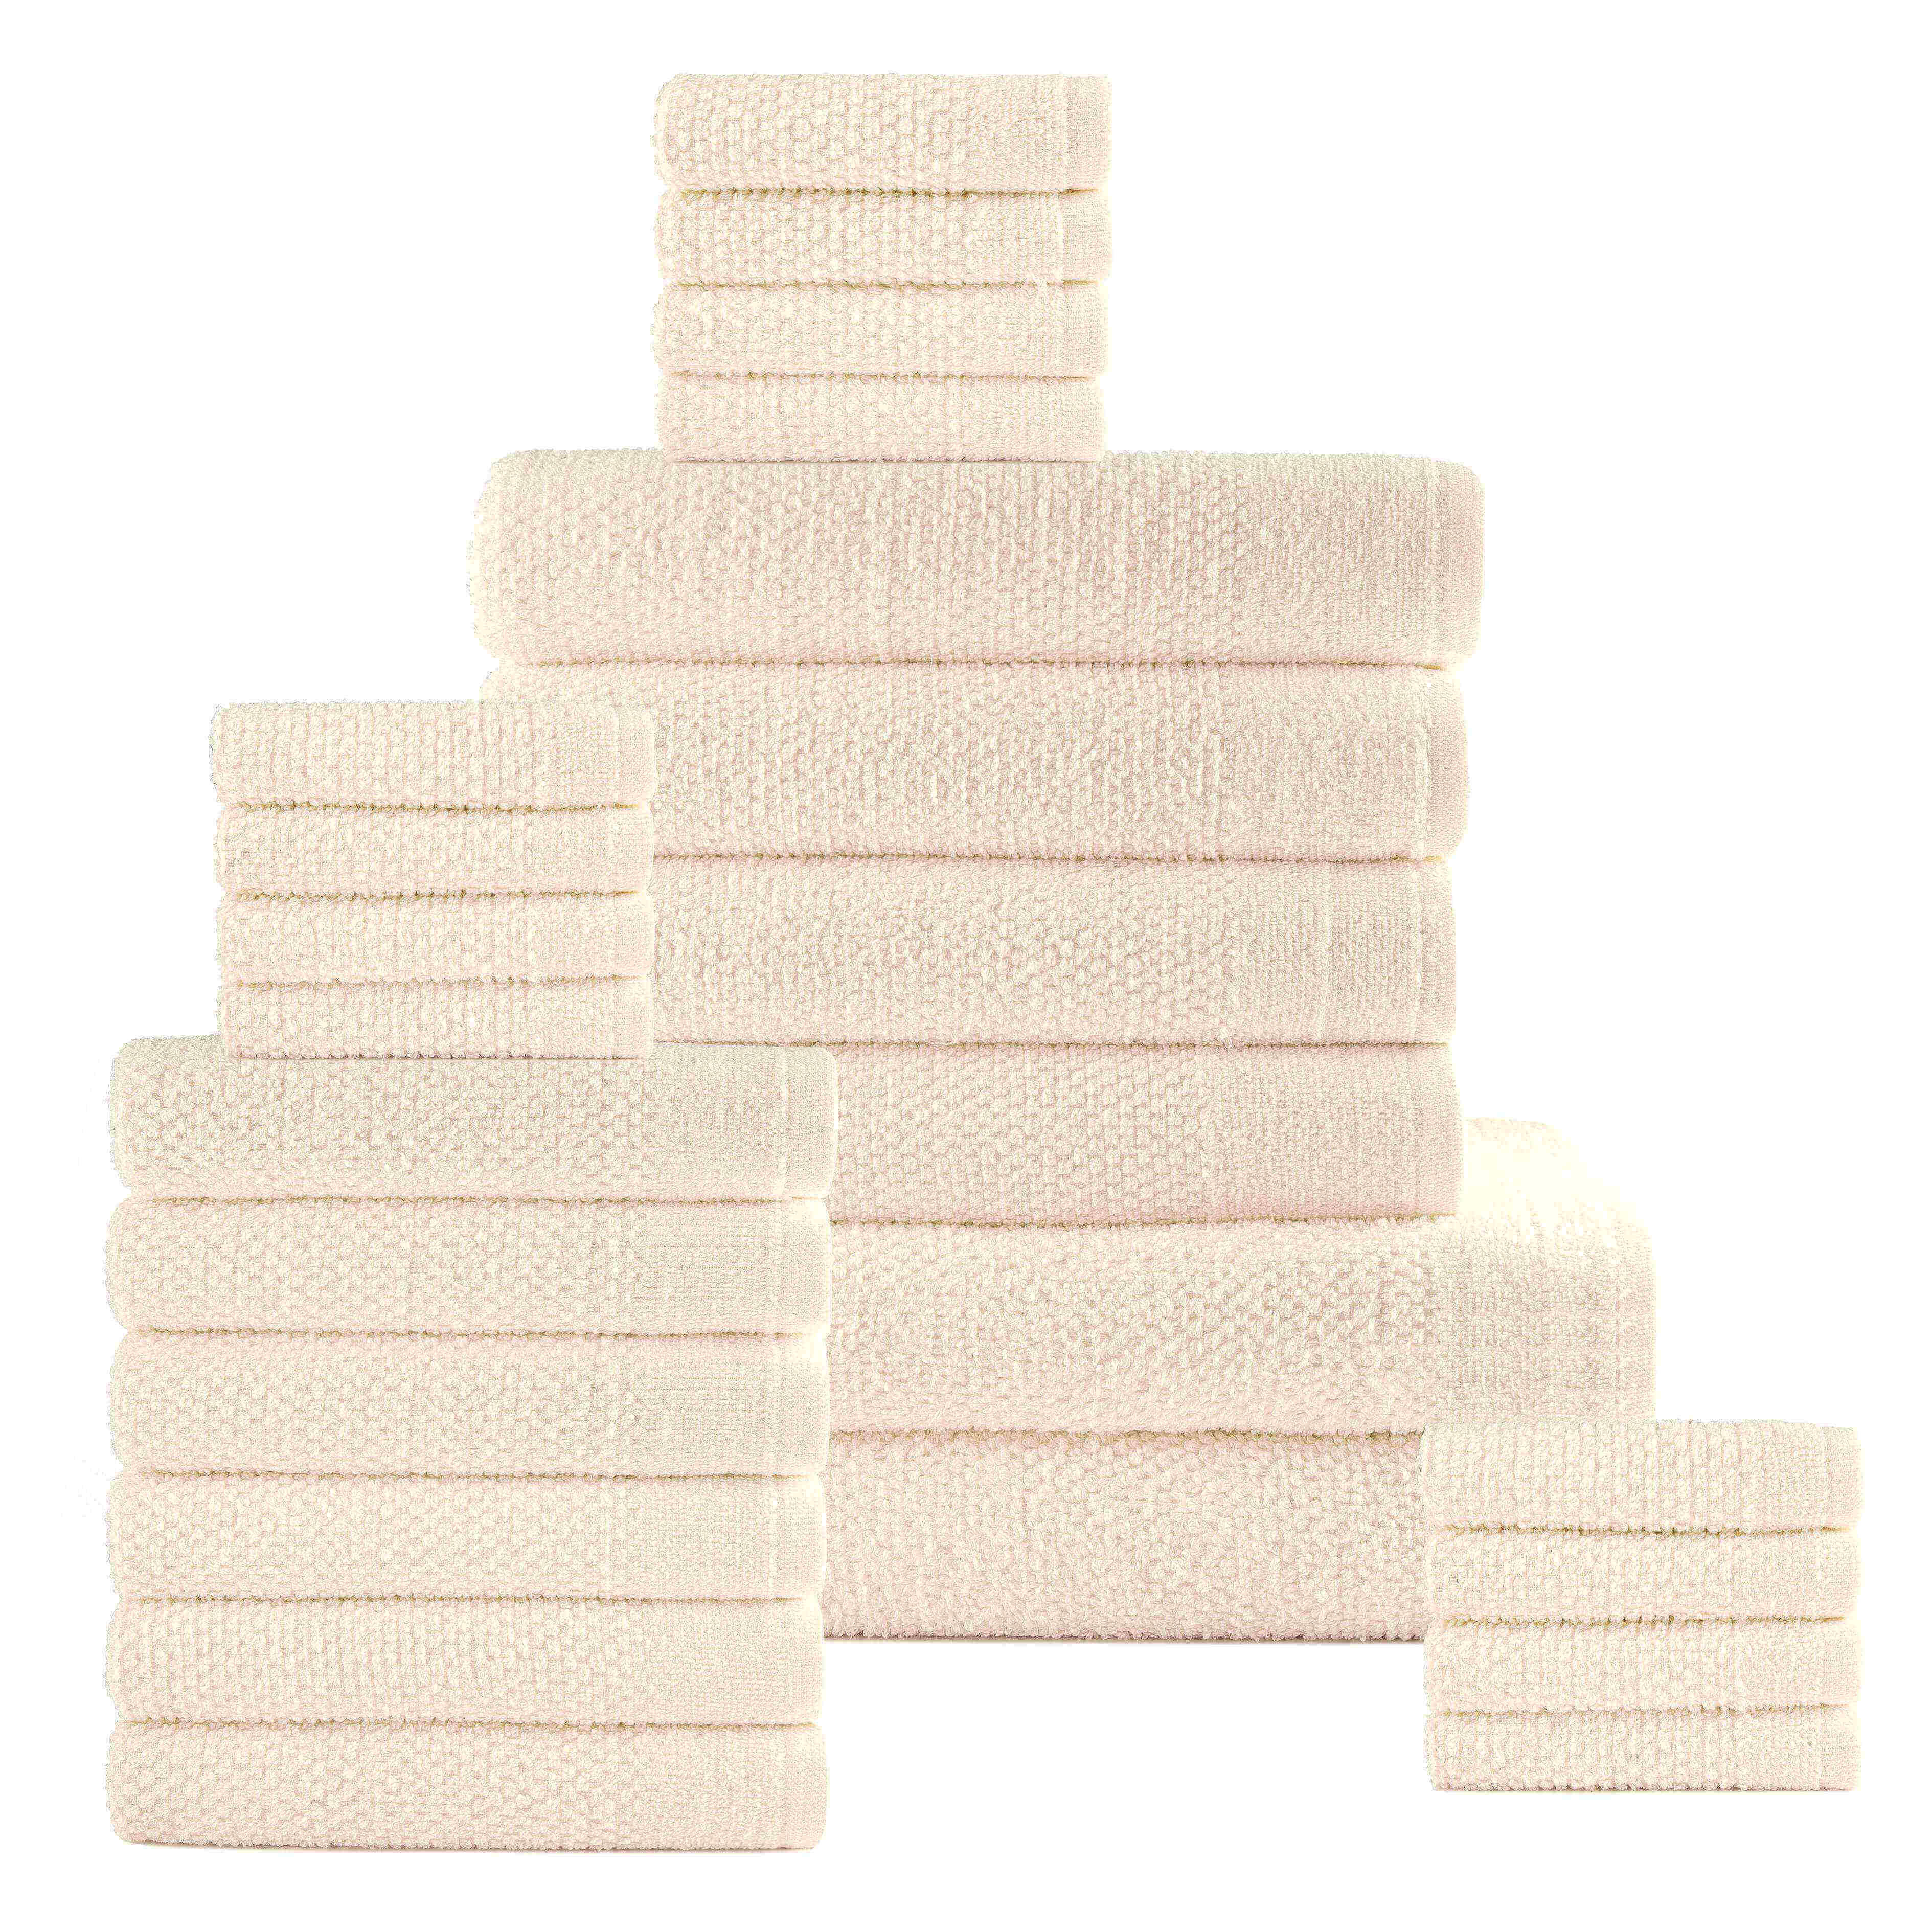 Cream Colour of 24 Piece Popcorn Cotton Bath Towel Set